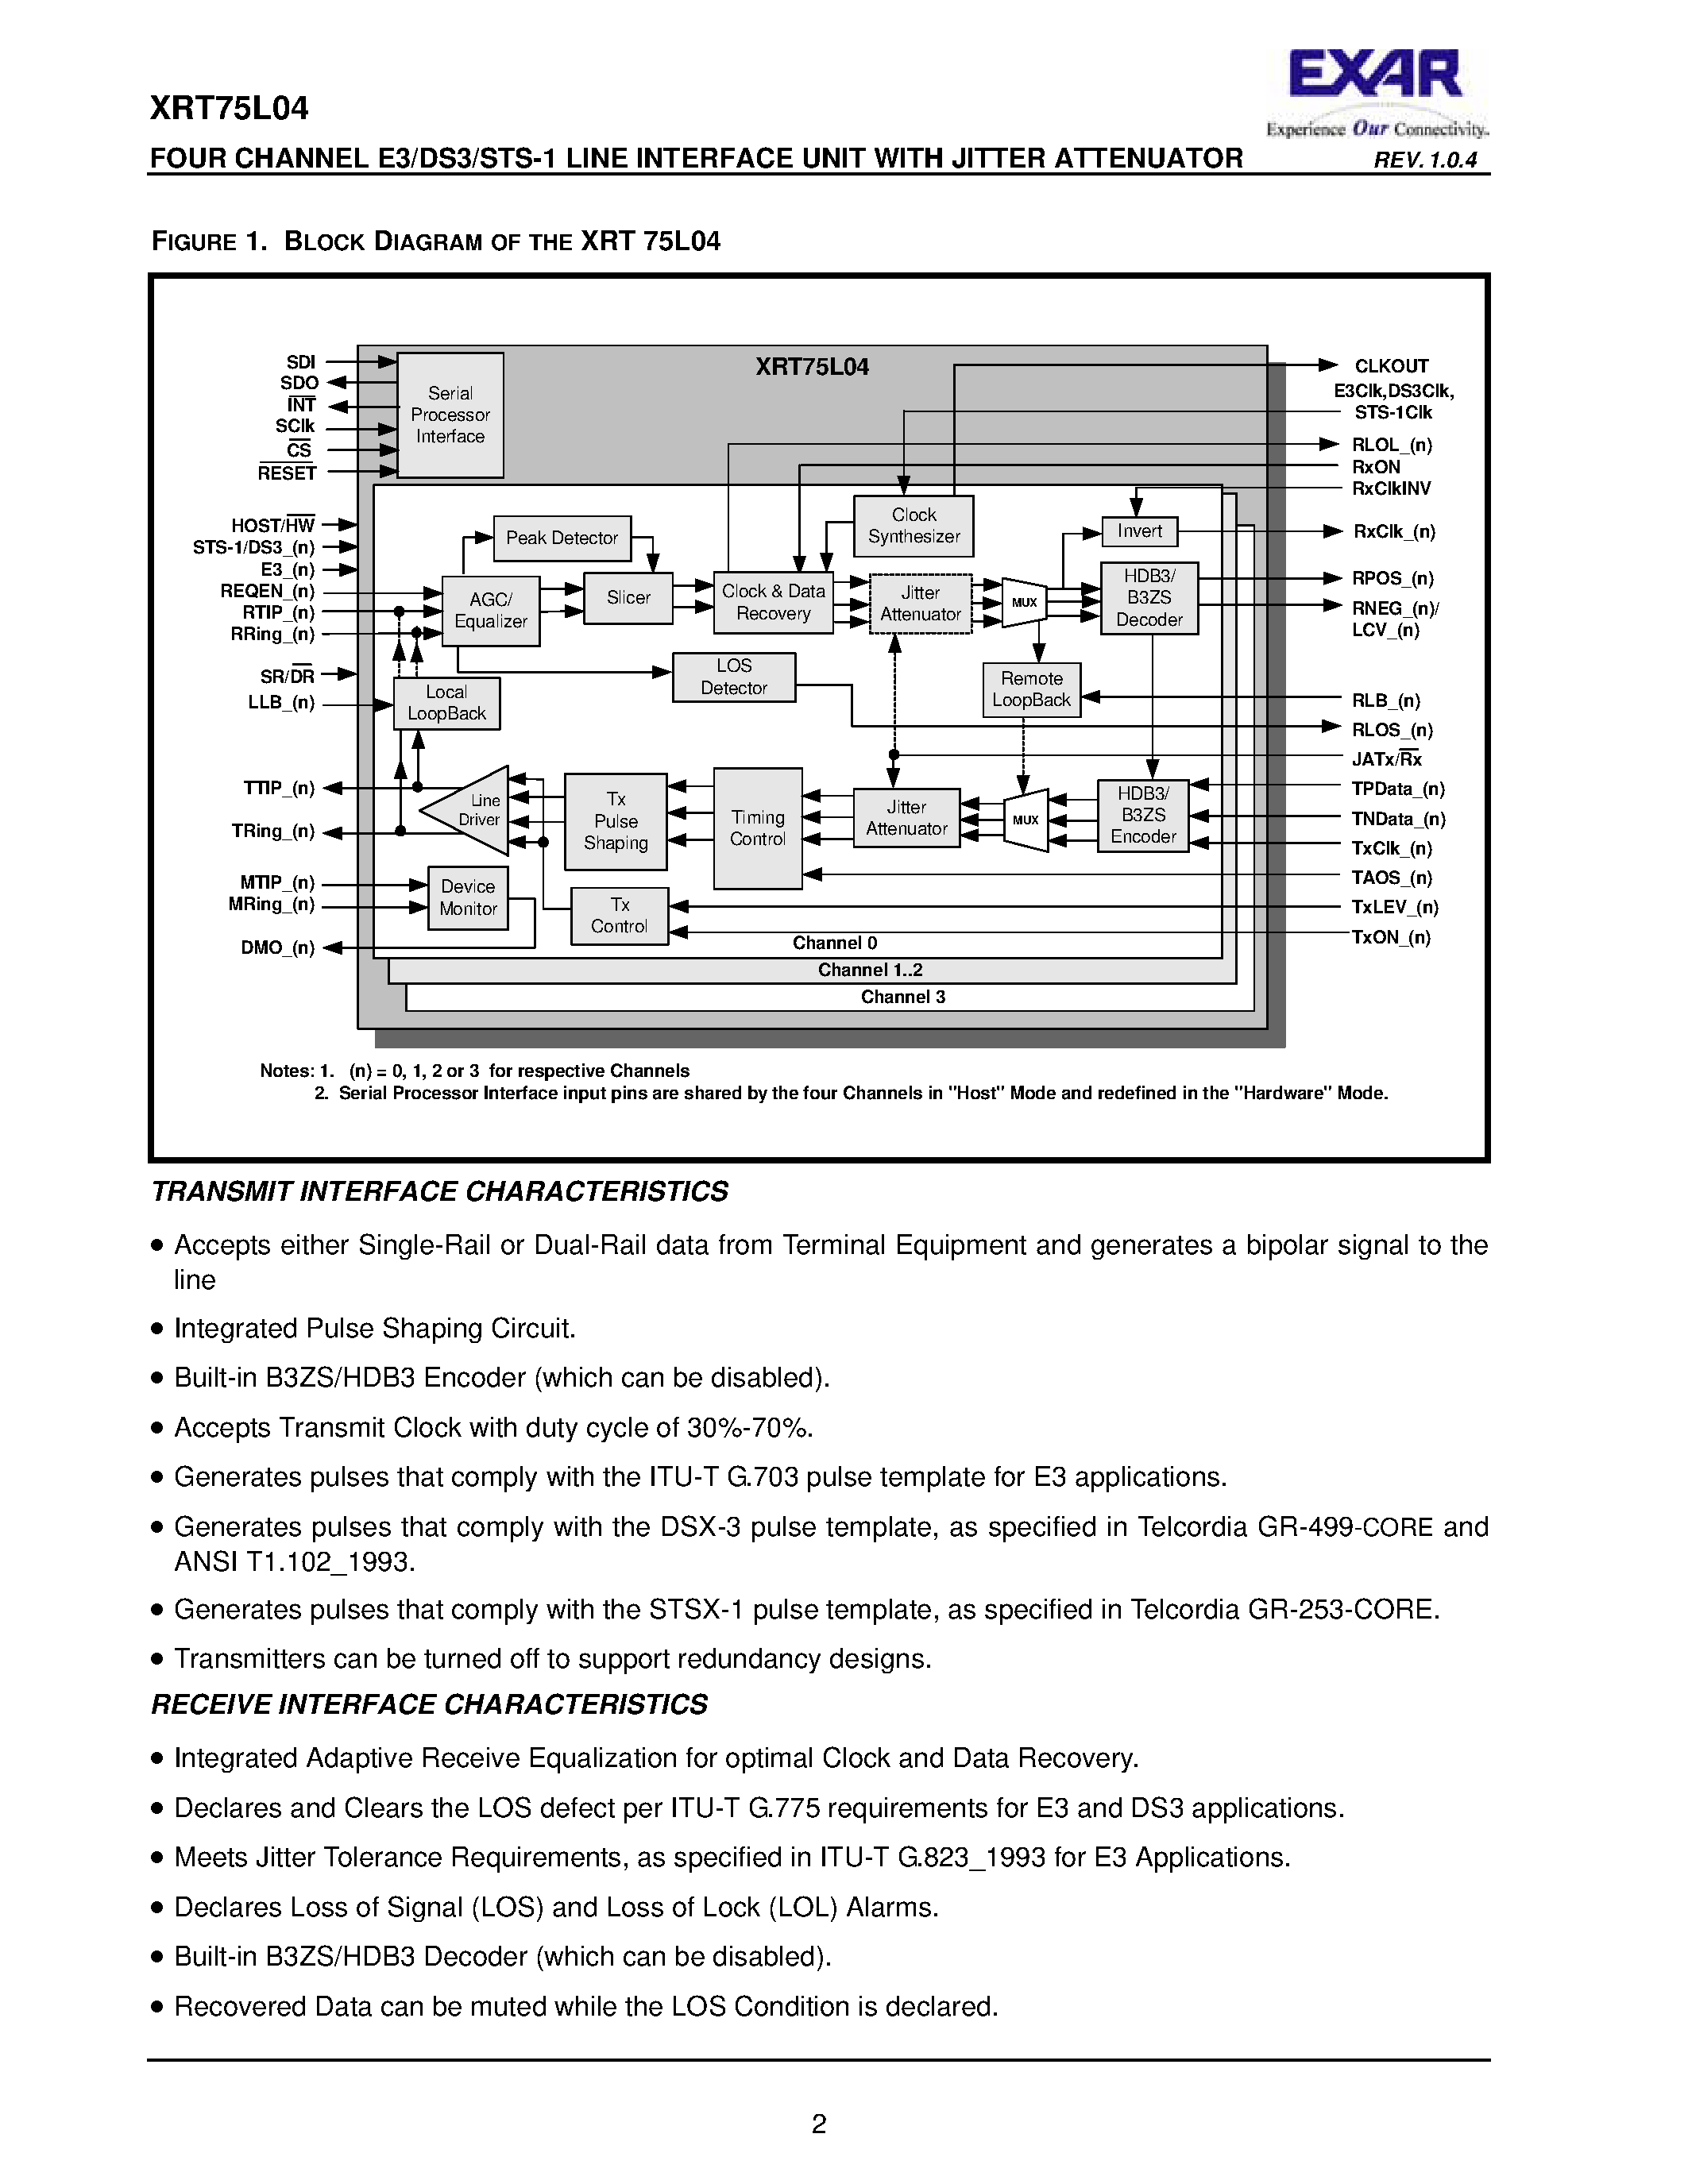 Datasheet XRT75L04 - FOUR CHANNEL E3/DS3/STS-1 LINE INTERFACE UNIT page 2